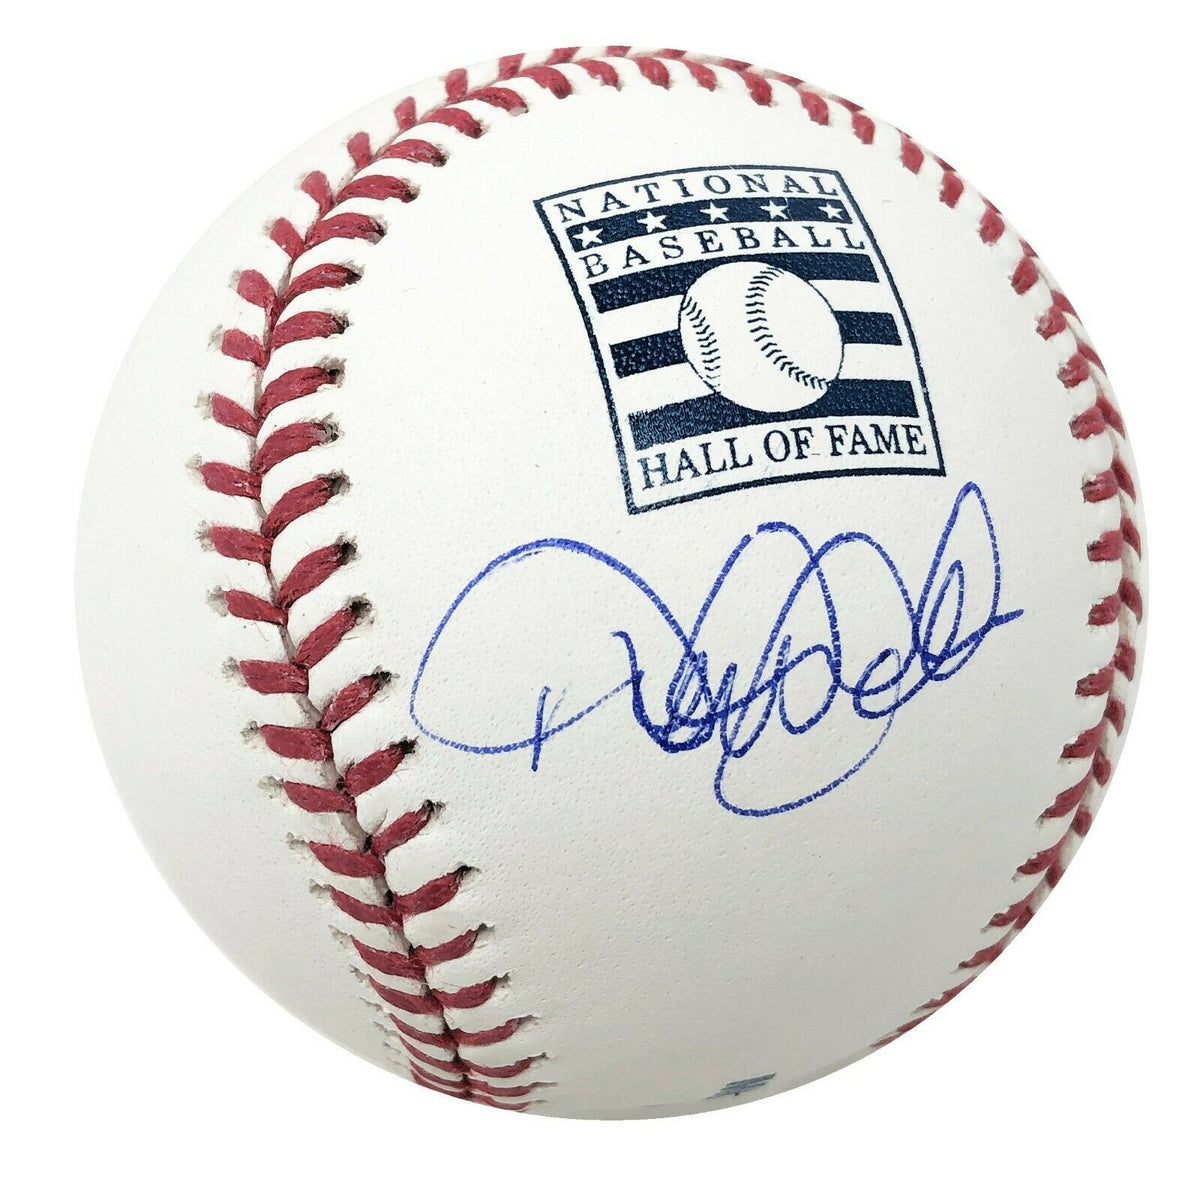 Official Derek Jeter New York Yankees 195 2014 Signature Hall Of